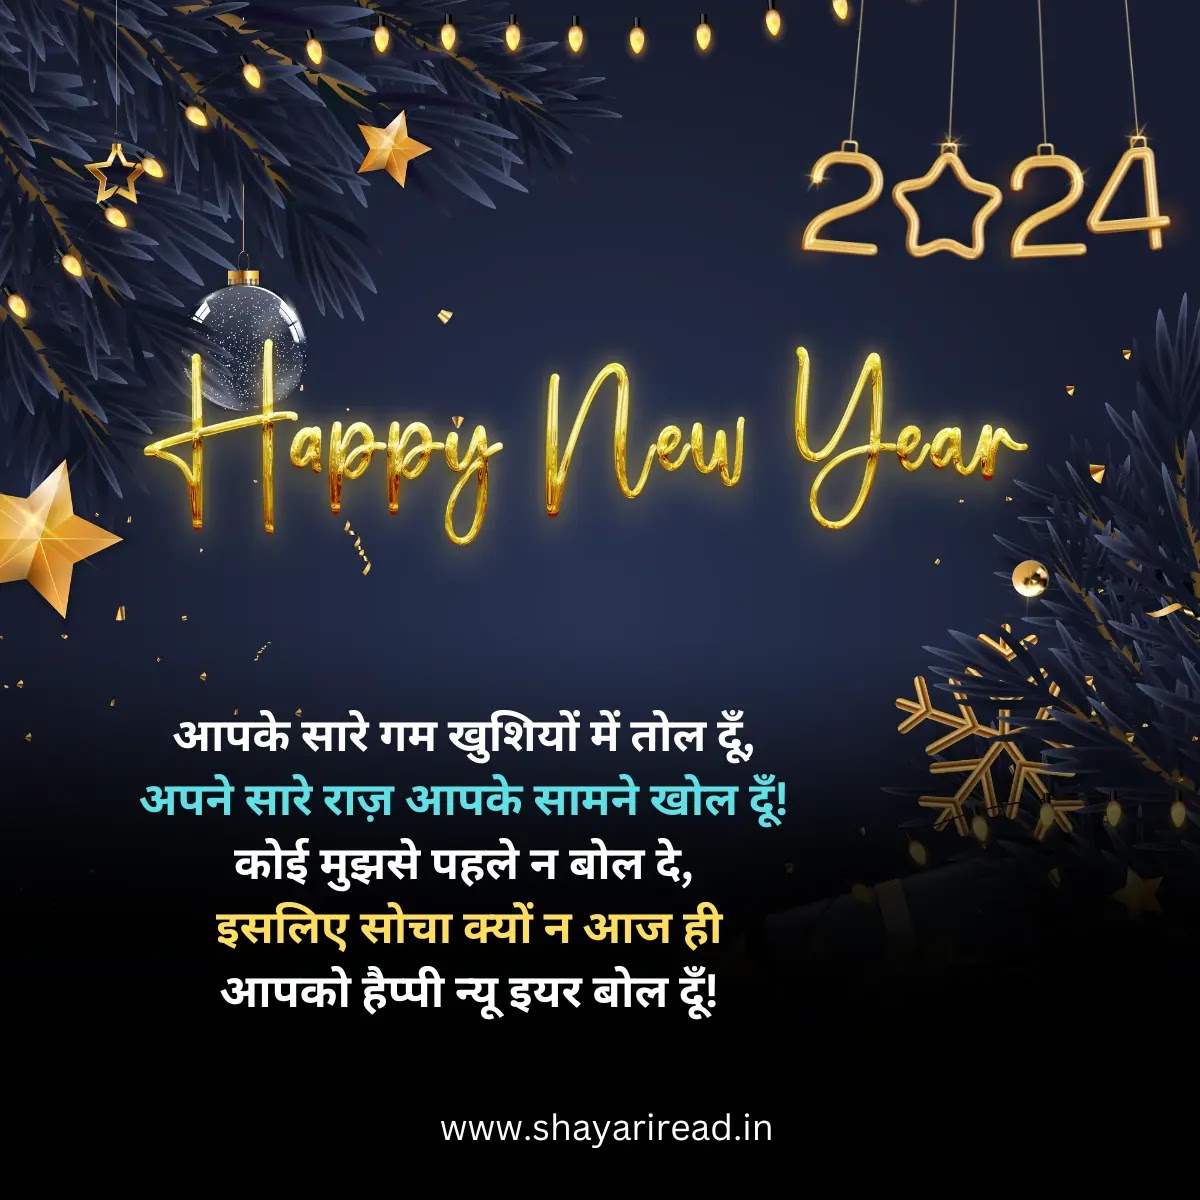 Happy New Year 2024 Shayari In Hindi With Wishes Images